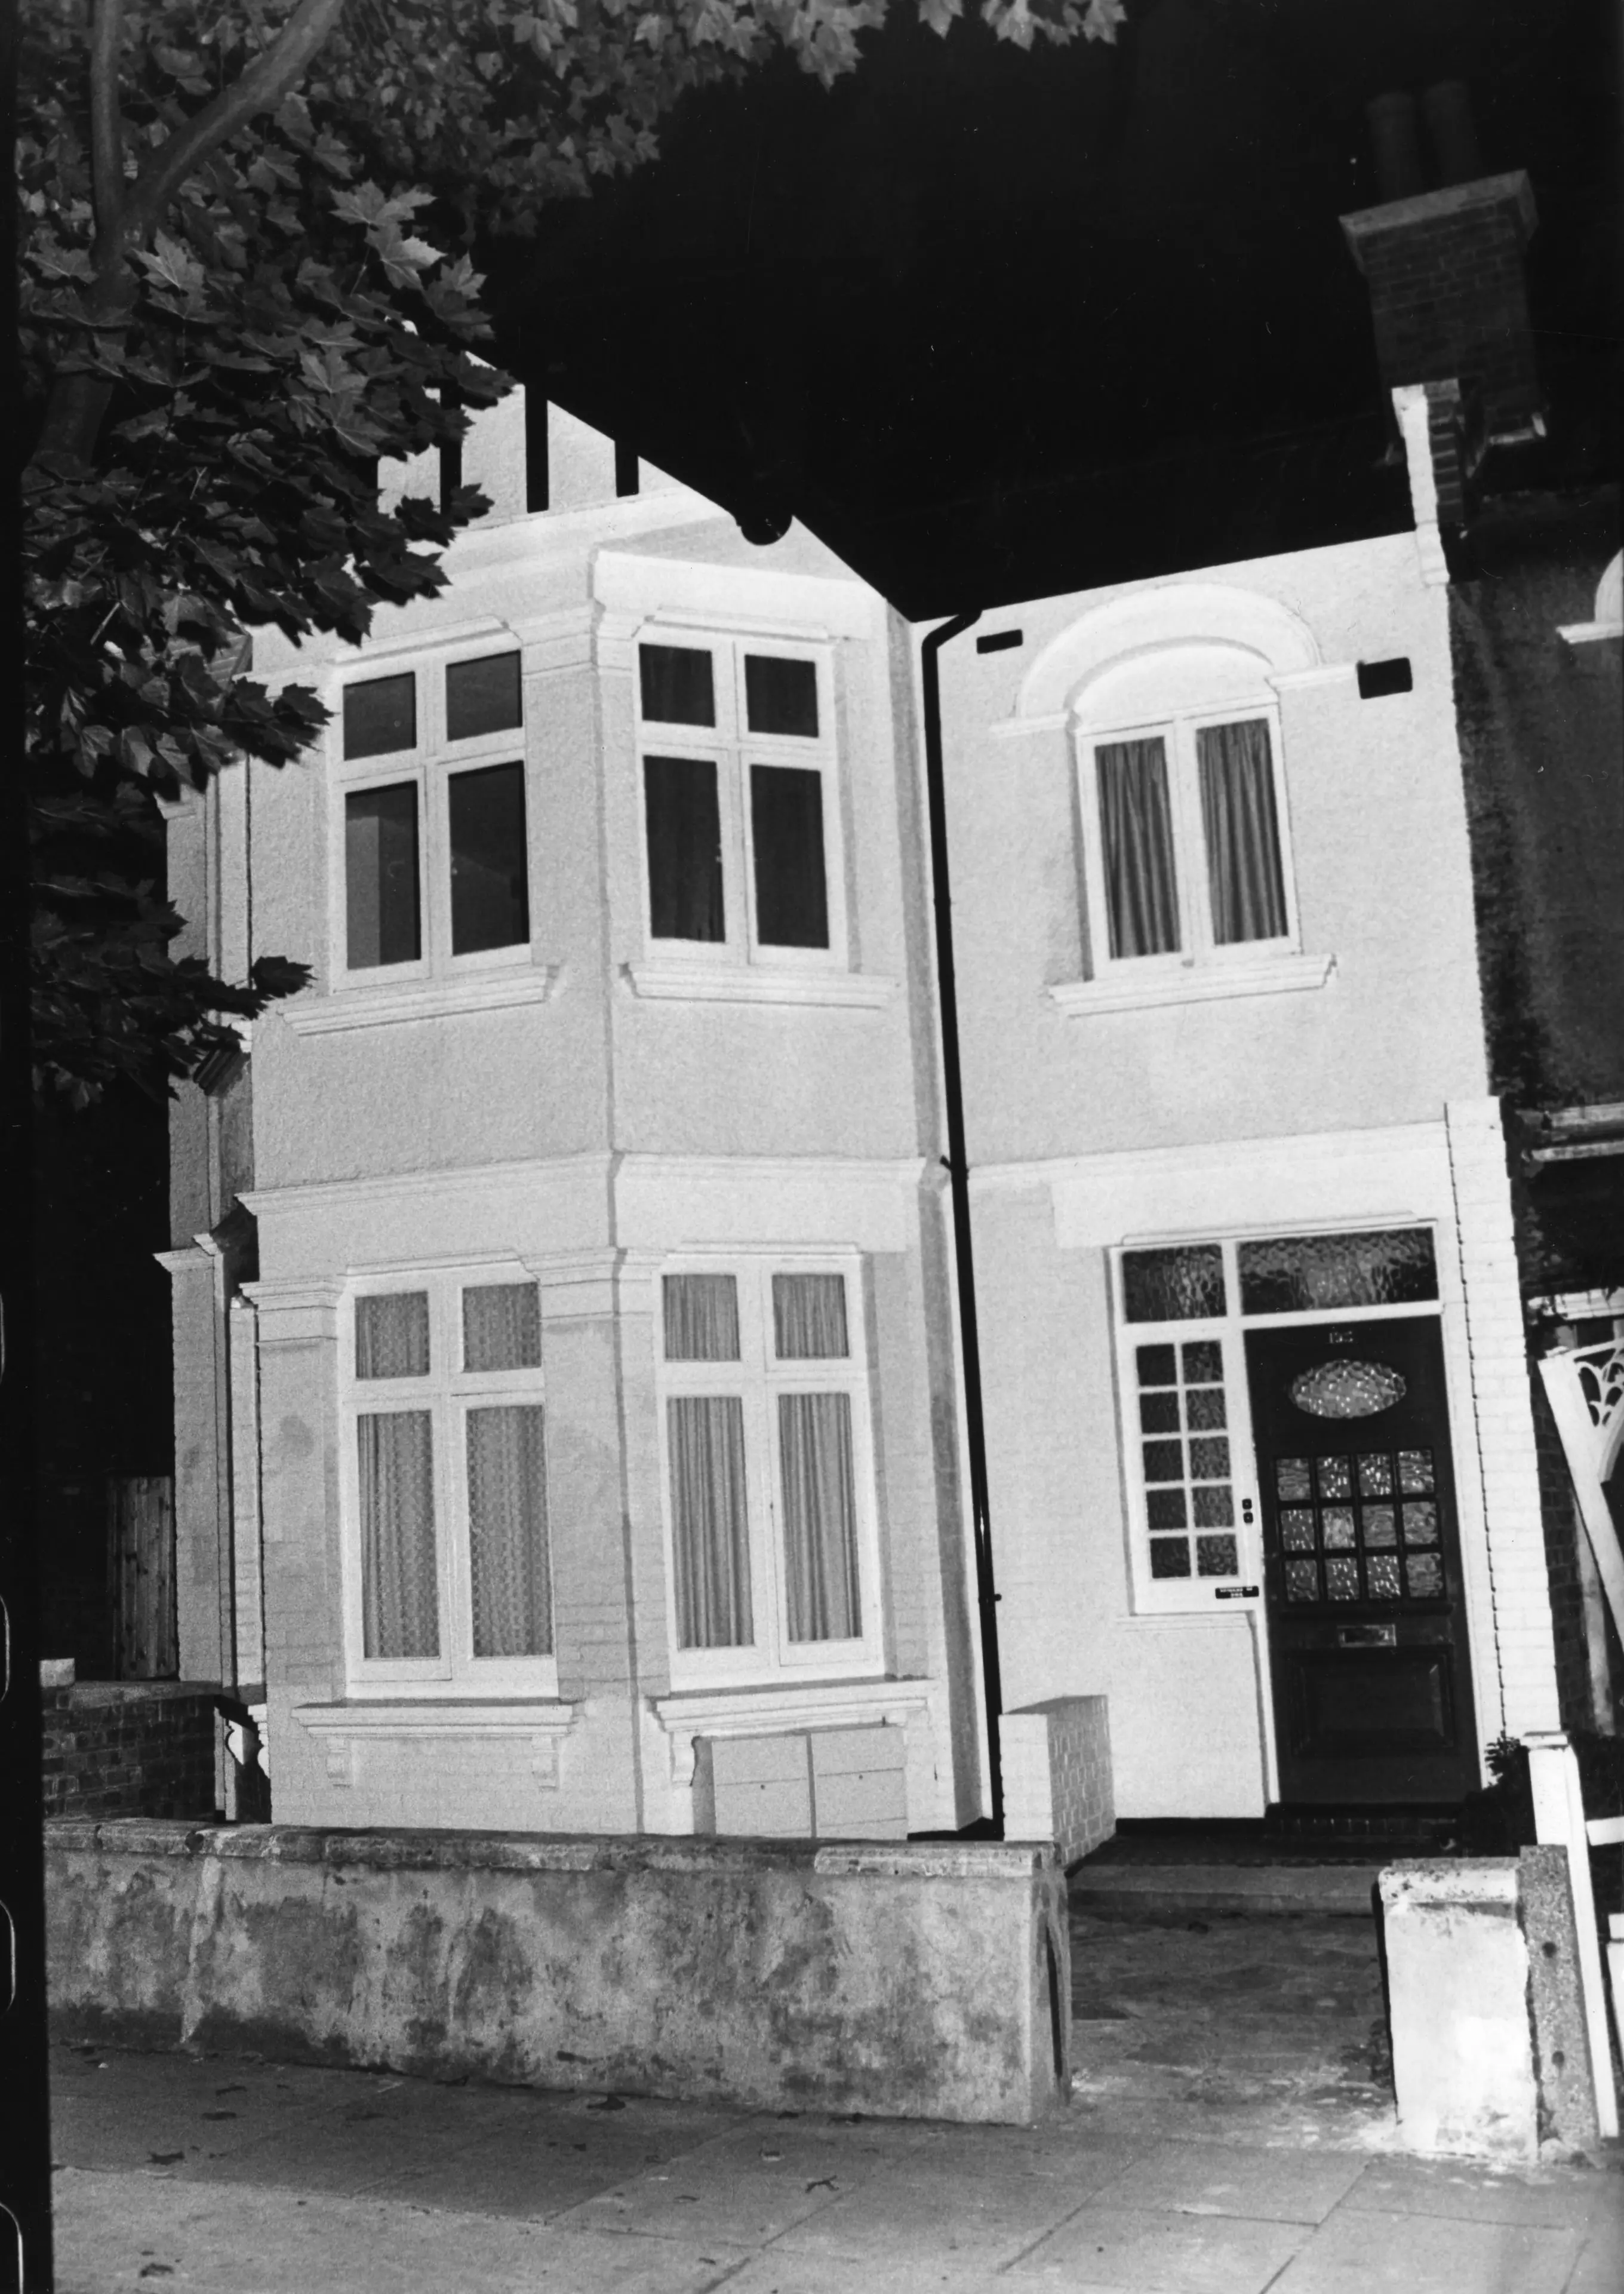 Dennis Nilsen's former home in Cricklewood, North London.